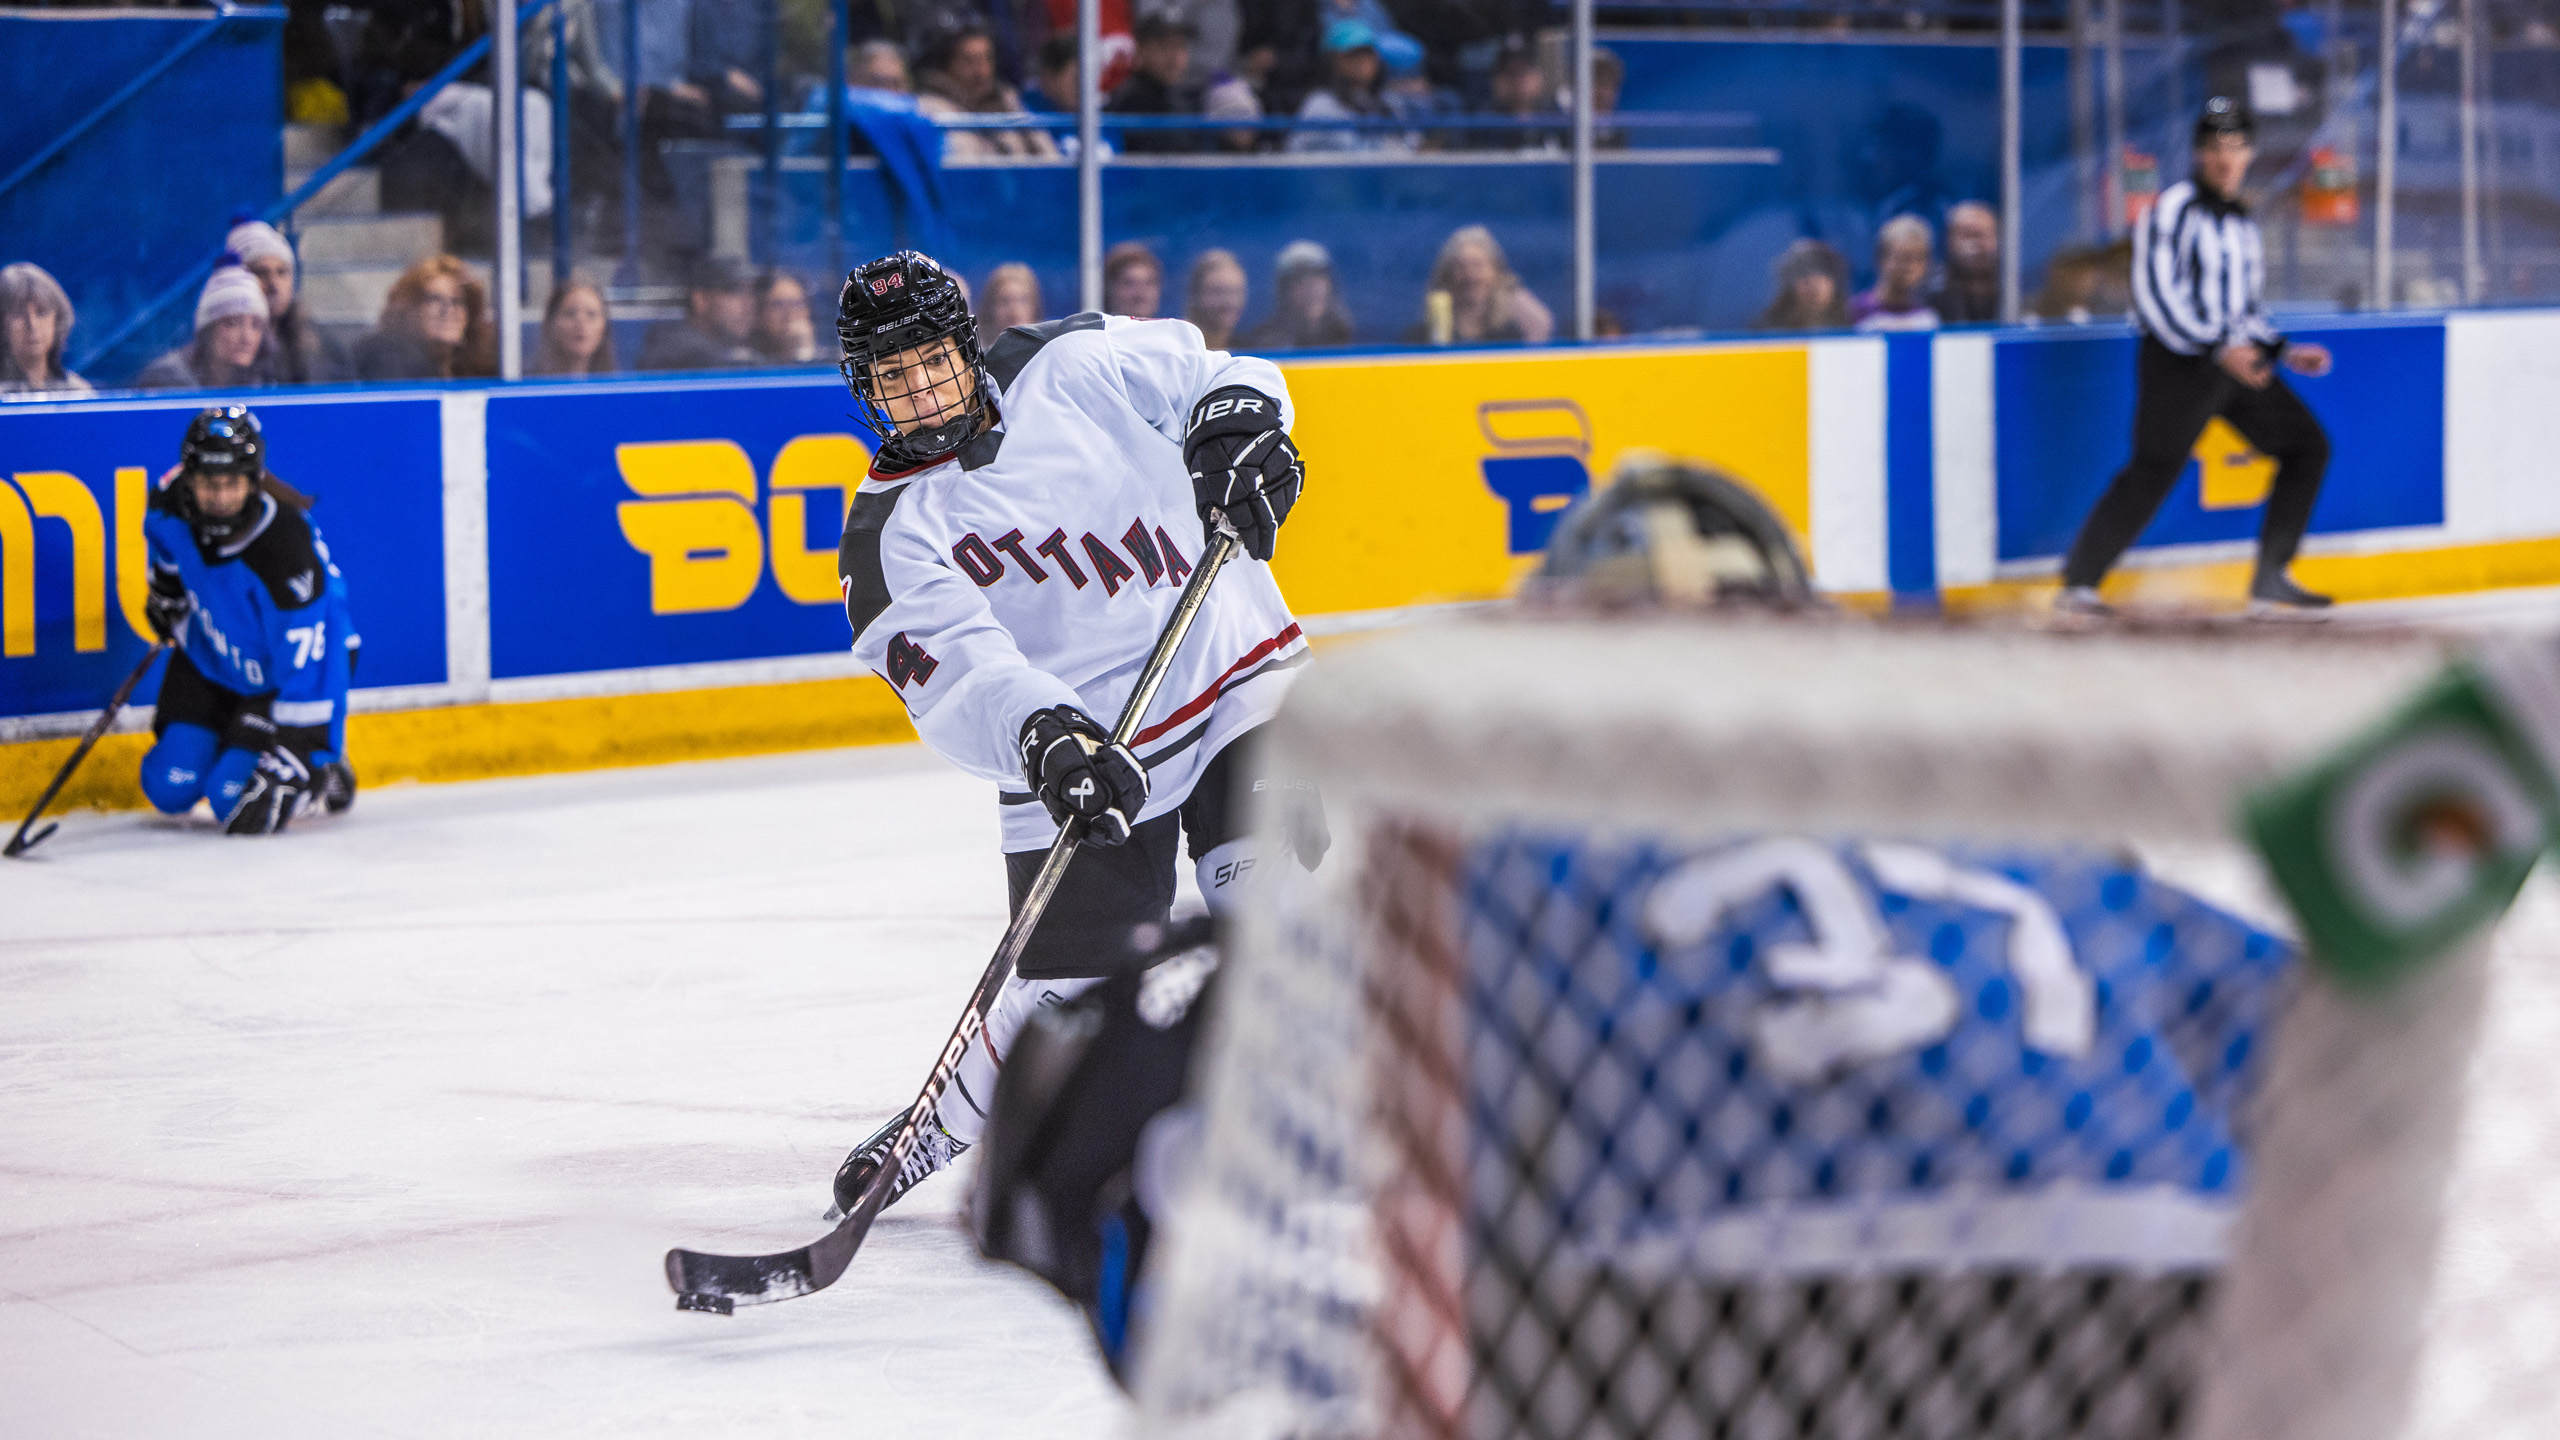 A PWHL Ottawa player shots the puck towards the Toronto net